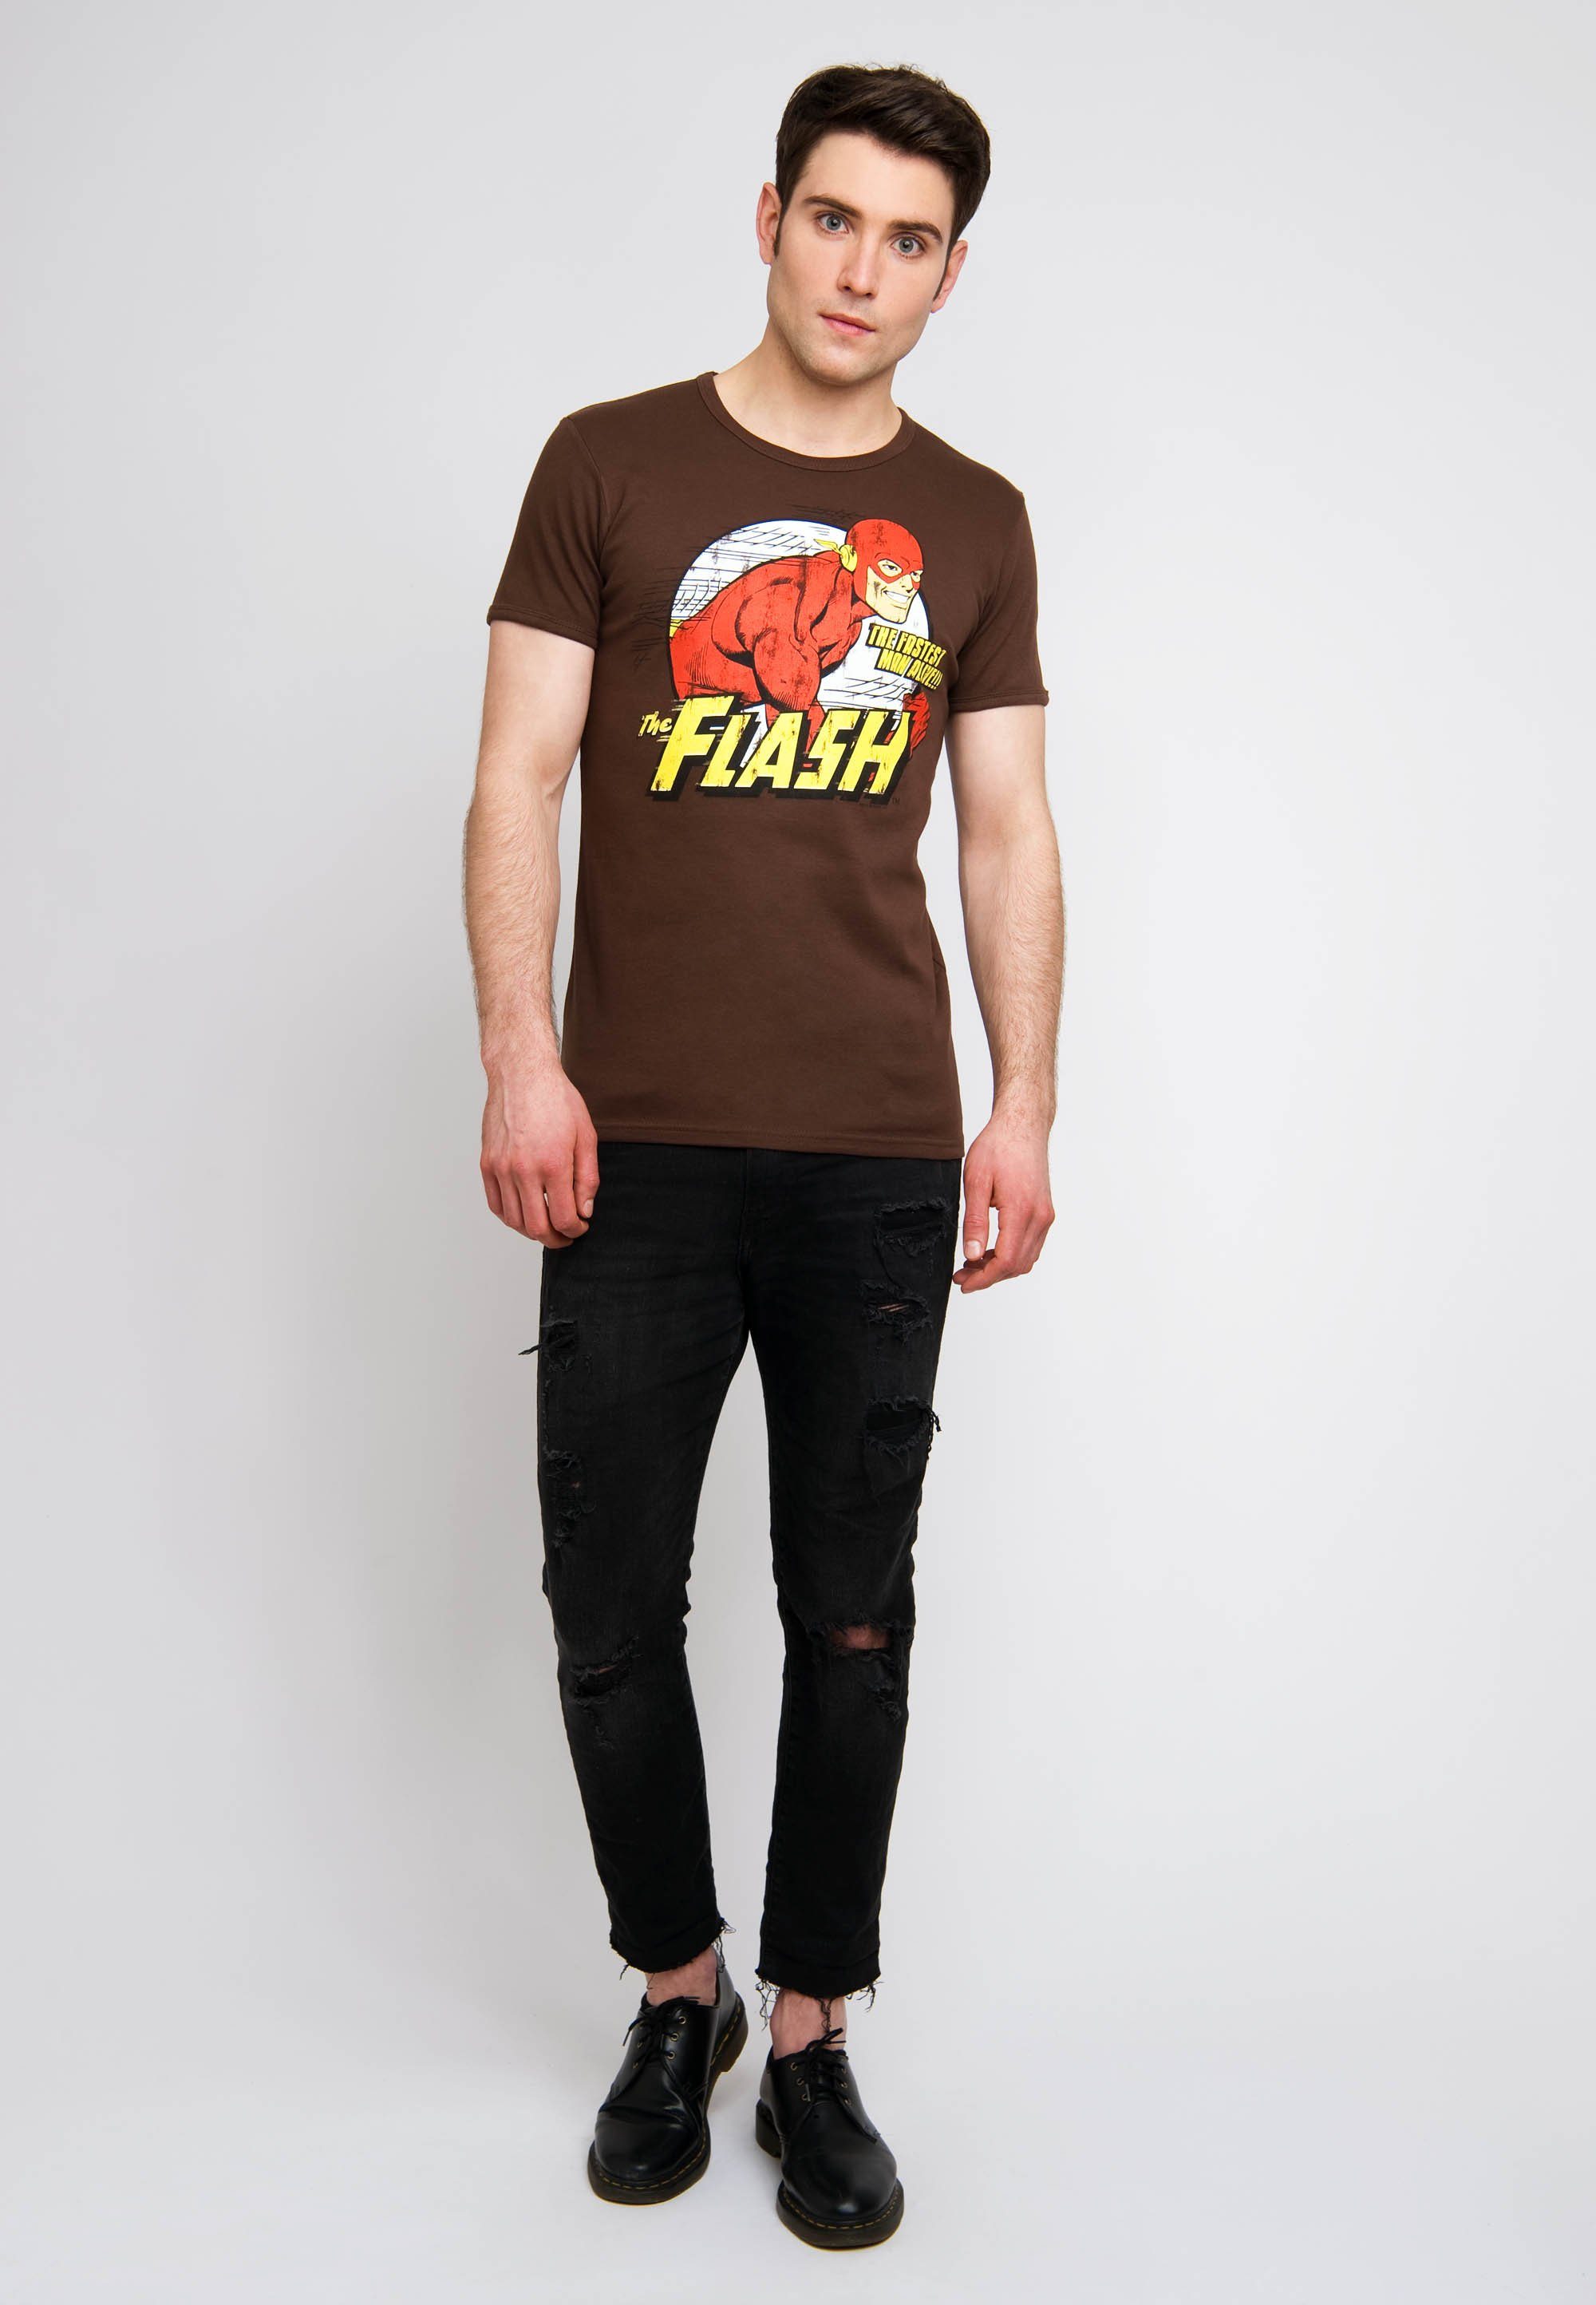 LOGOSHIRT The braun mit Flash-Print T-Shirt coolem